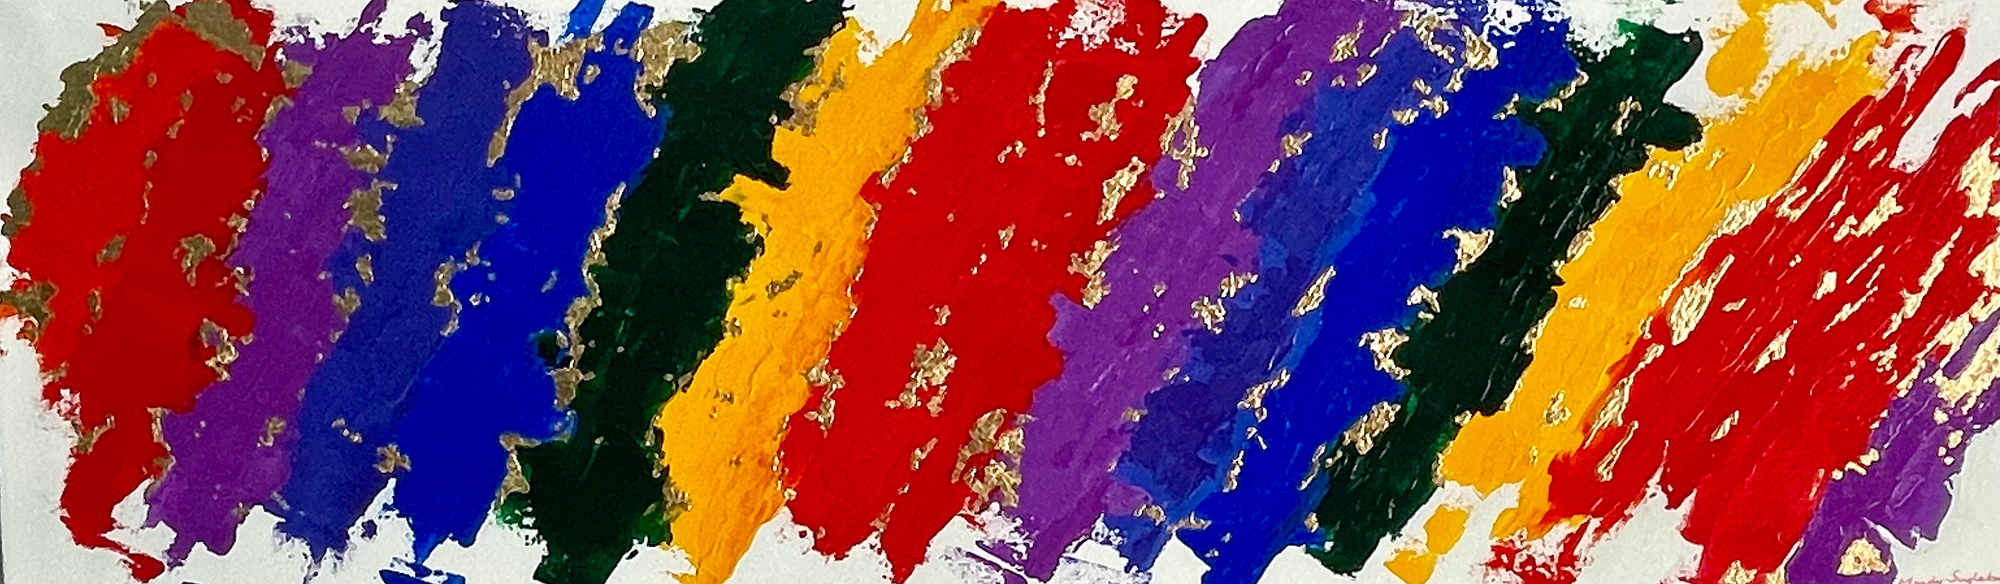 Rainbow painting